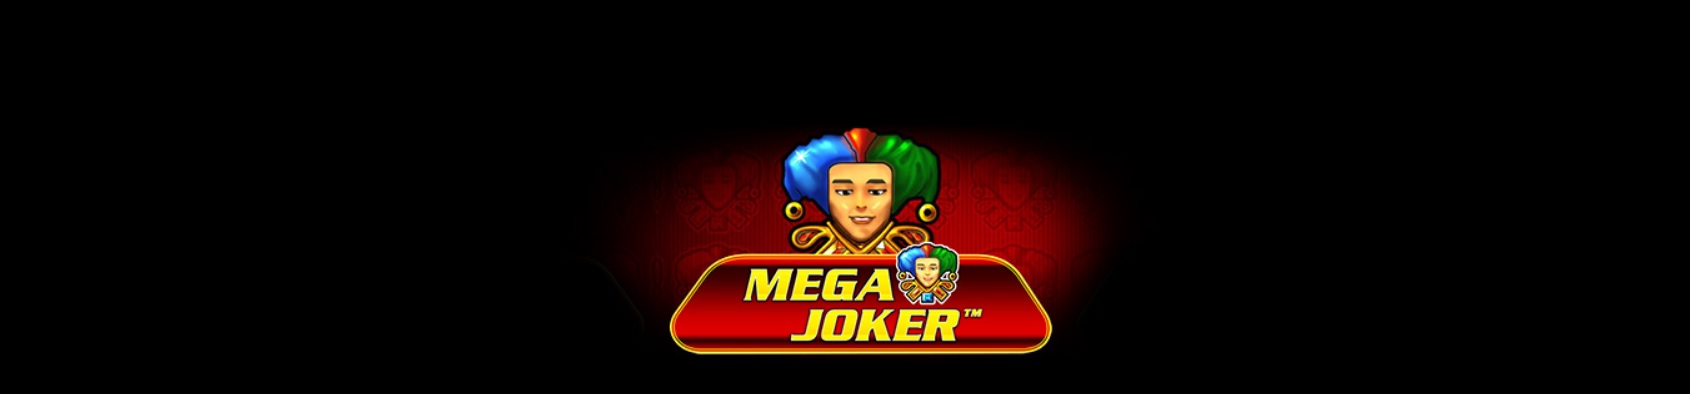 Mega Joker Revizuire